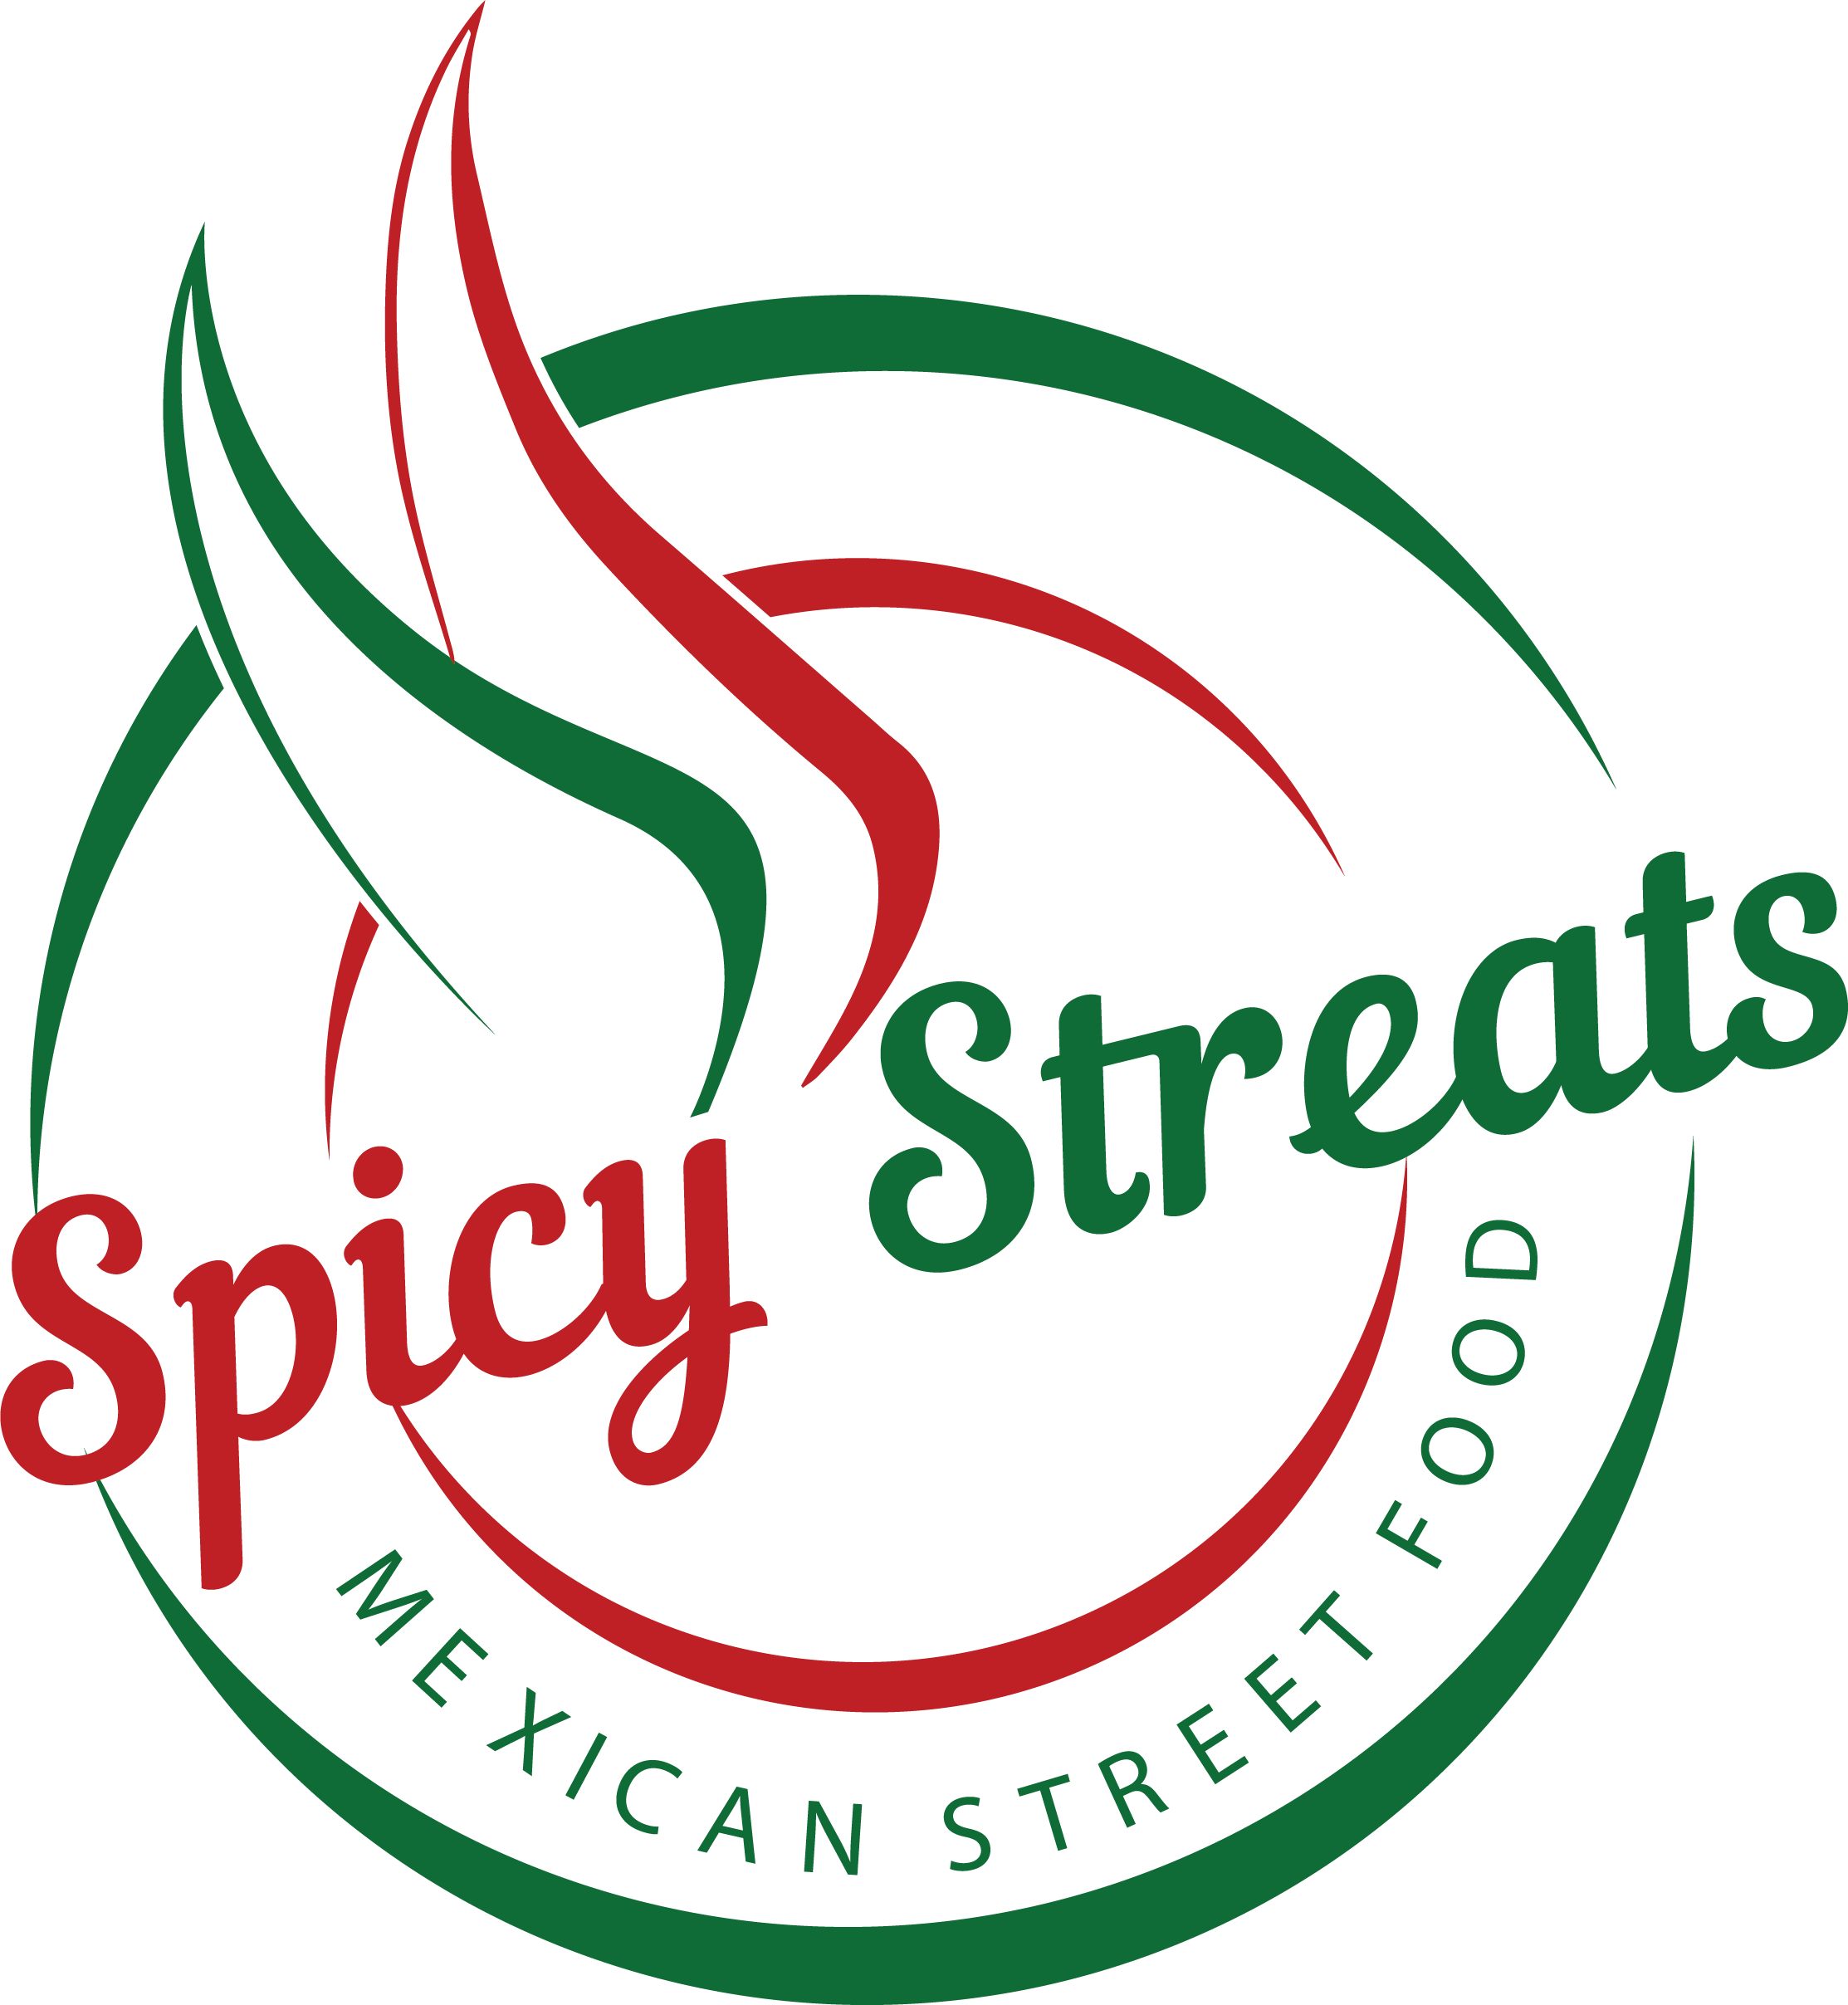 Spicy Streats